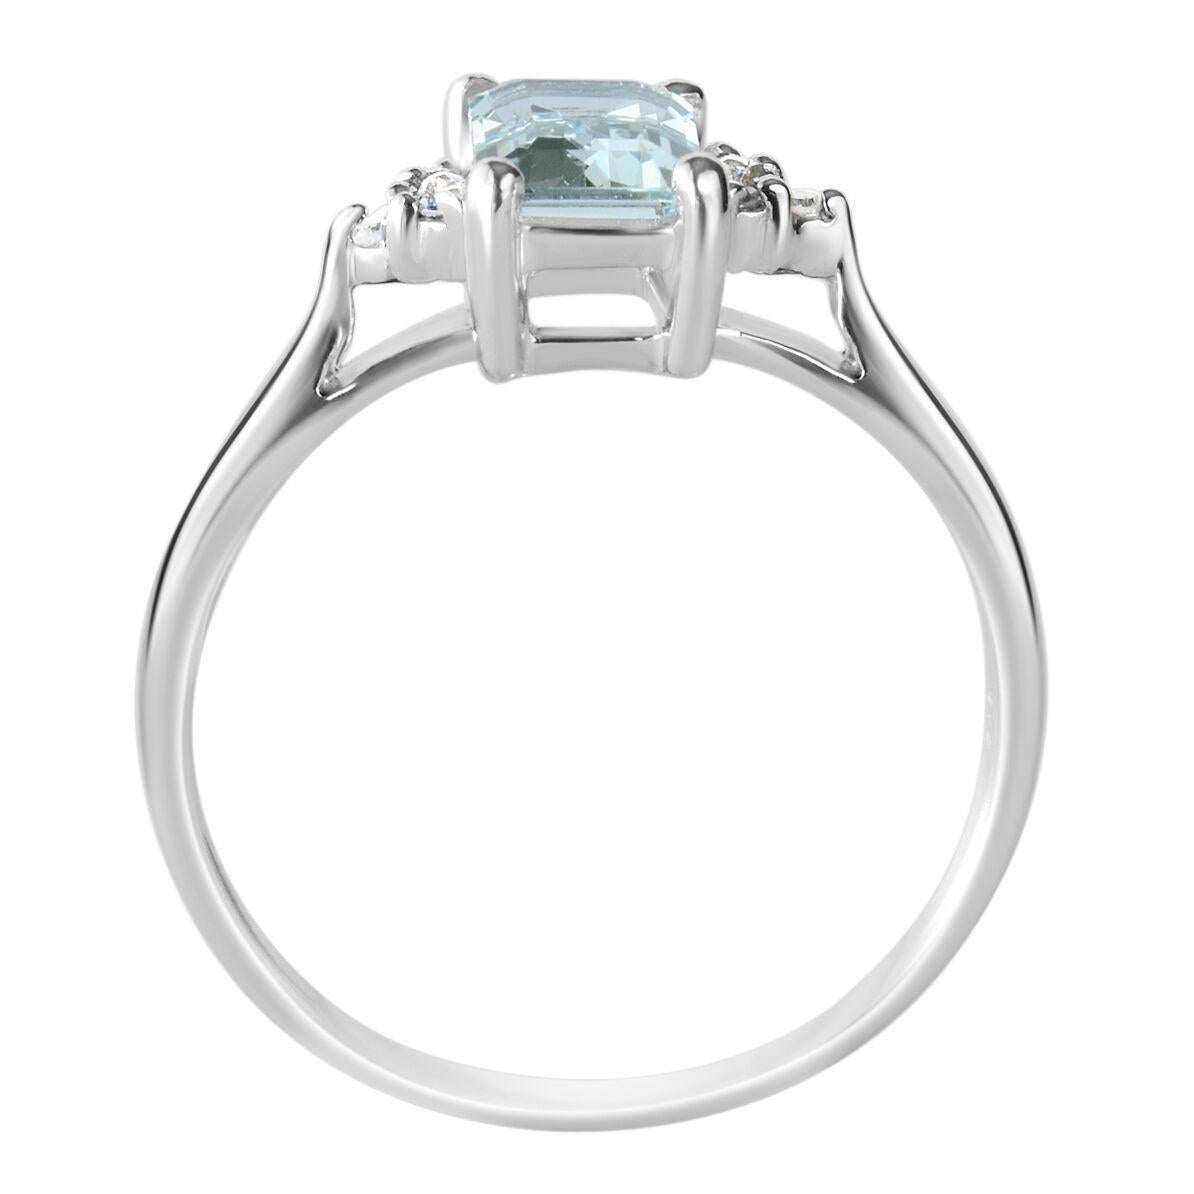 0.90 Carat Natural Emerald Cut Aquamarine Ring Solid White Gold with 6 Diamonds 2